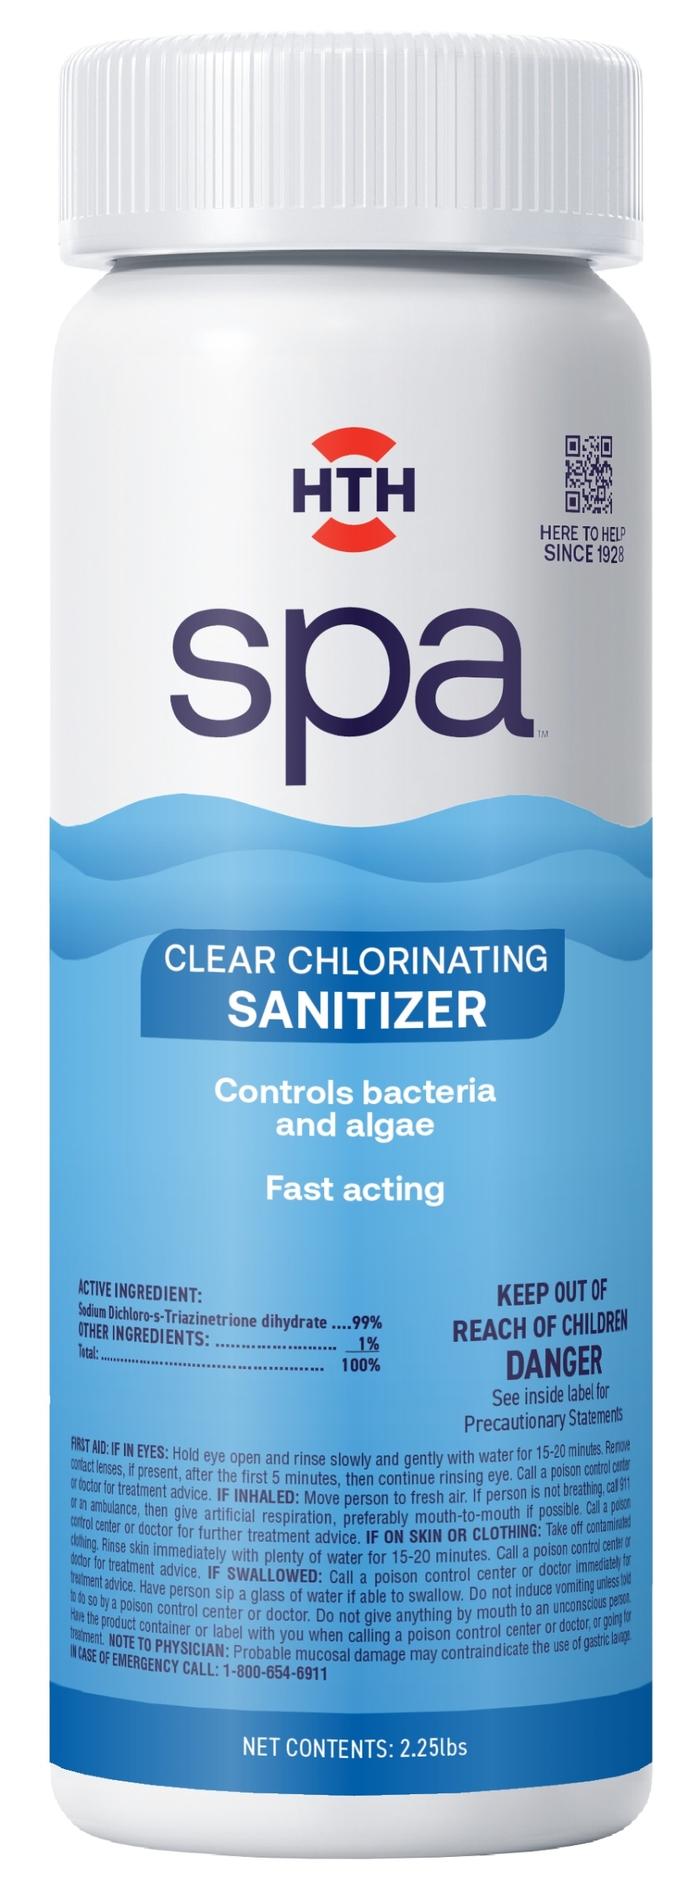 HTH Spa Clear Chlorinating Sanitizer 2.25LB